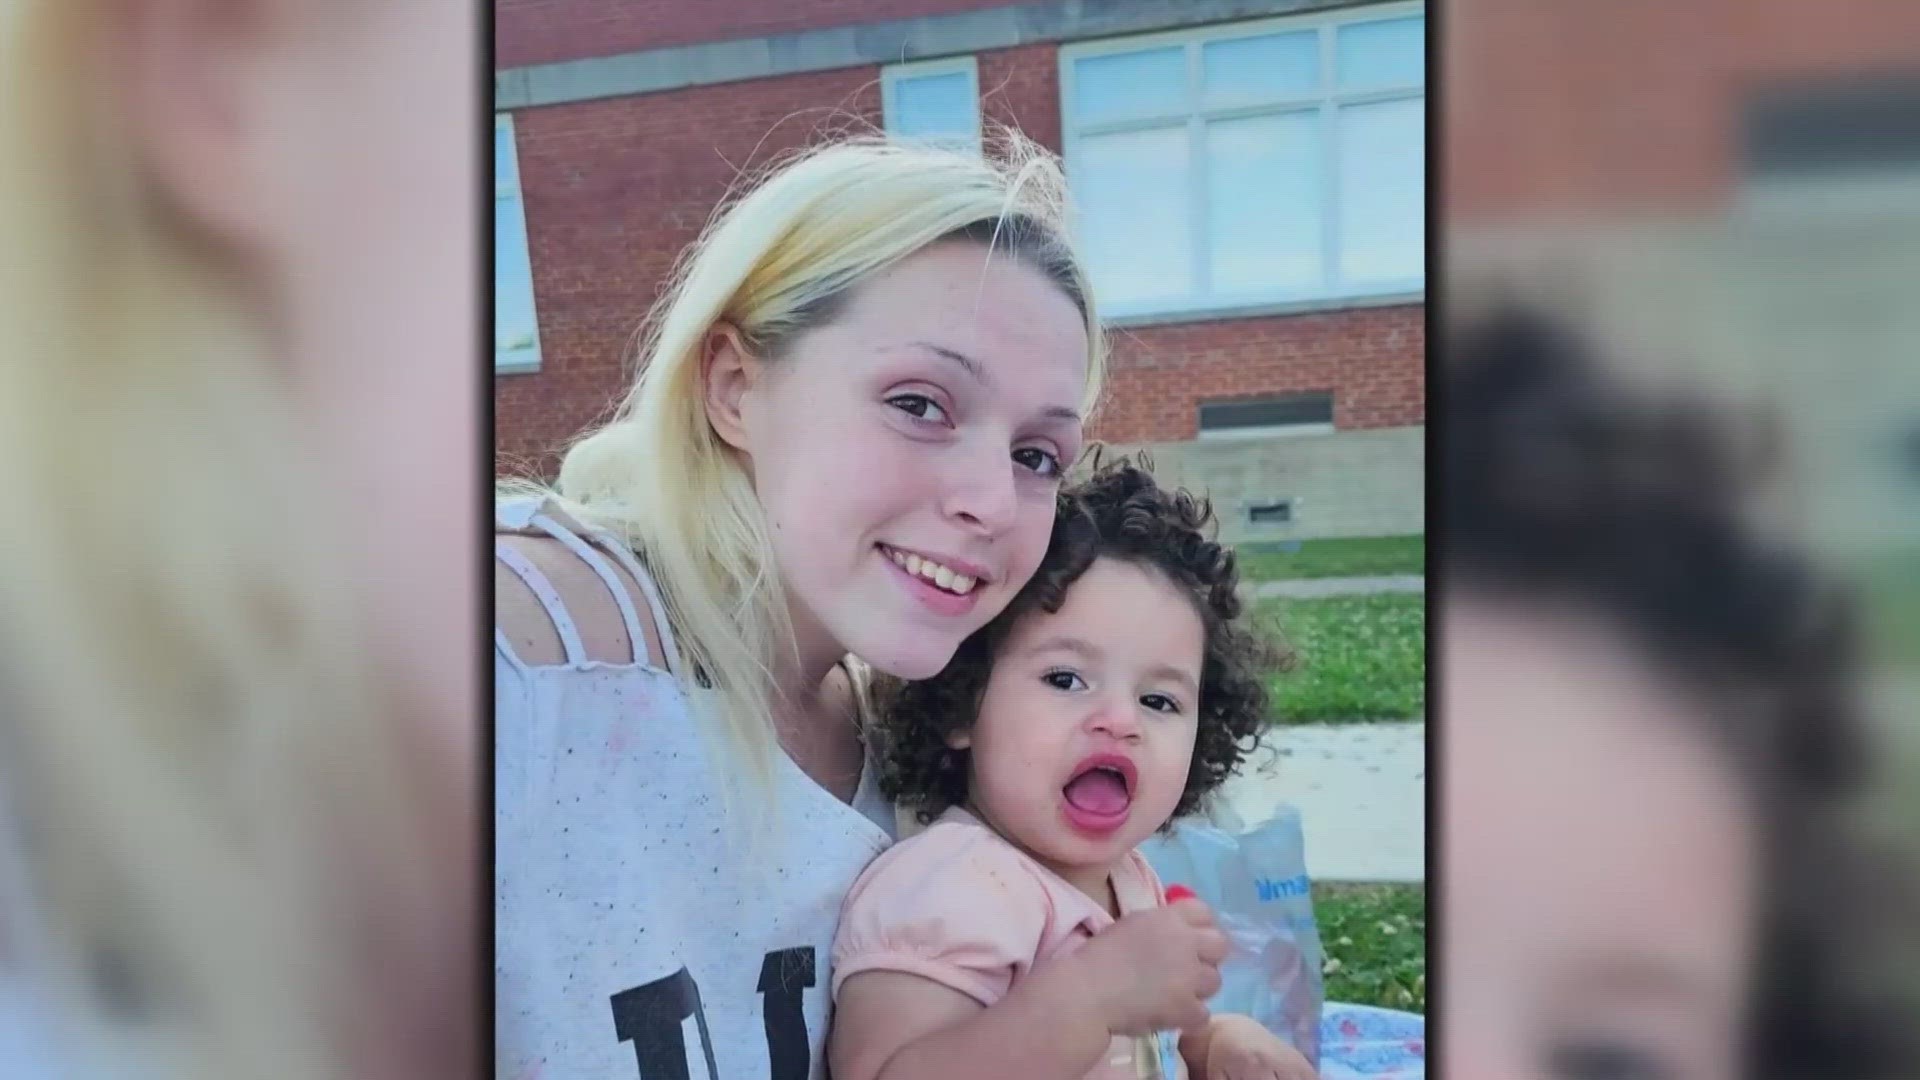 Layla Santanello, 21, went missing in Kingsport on June 27.